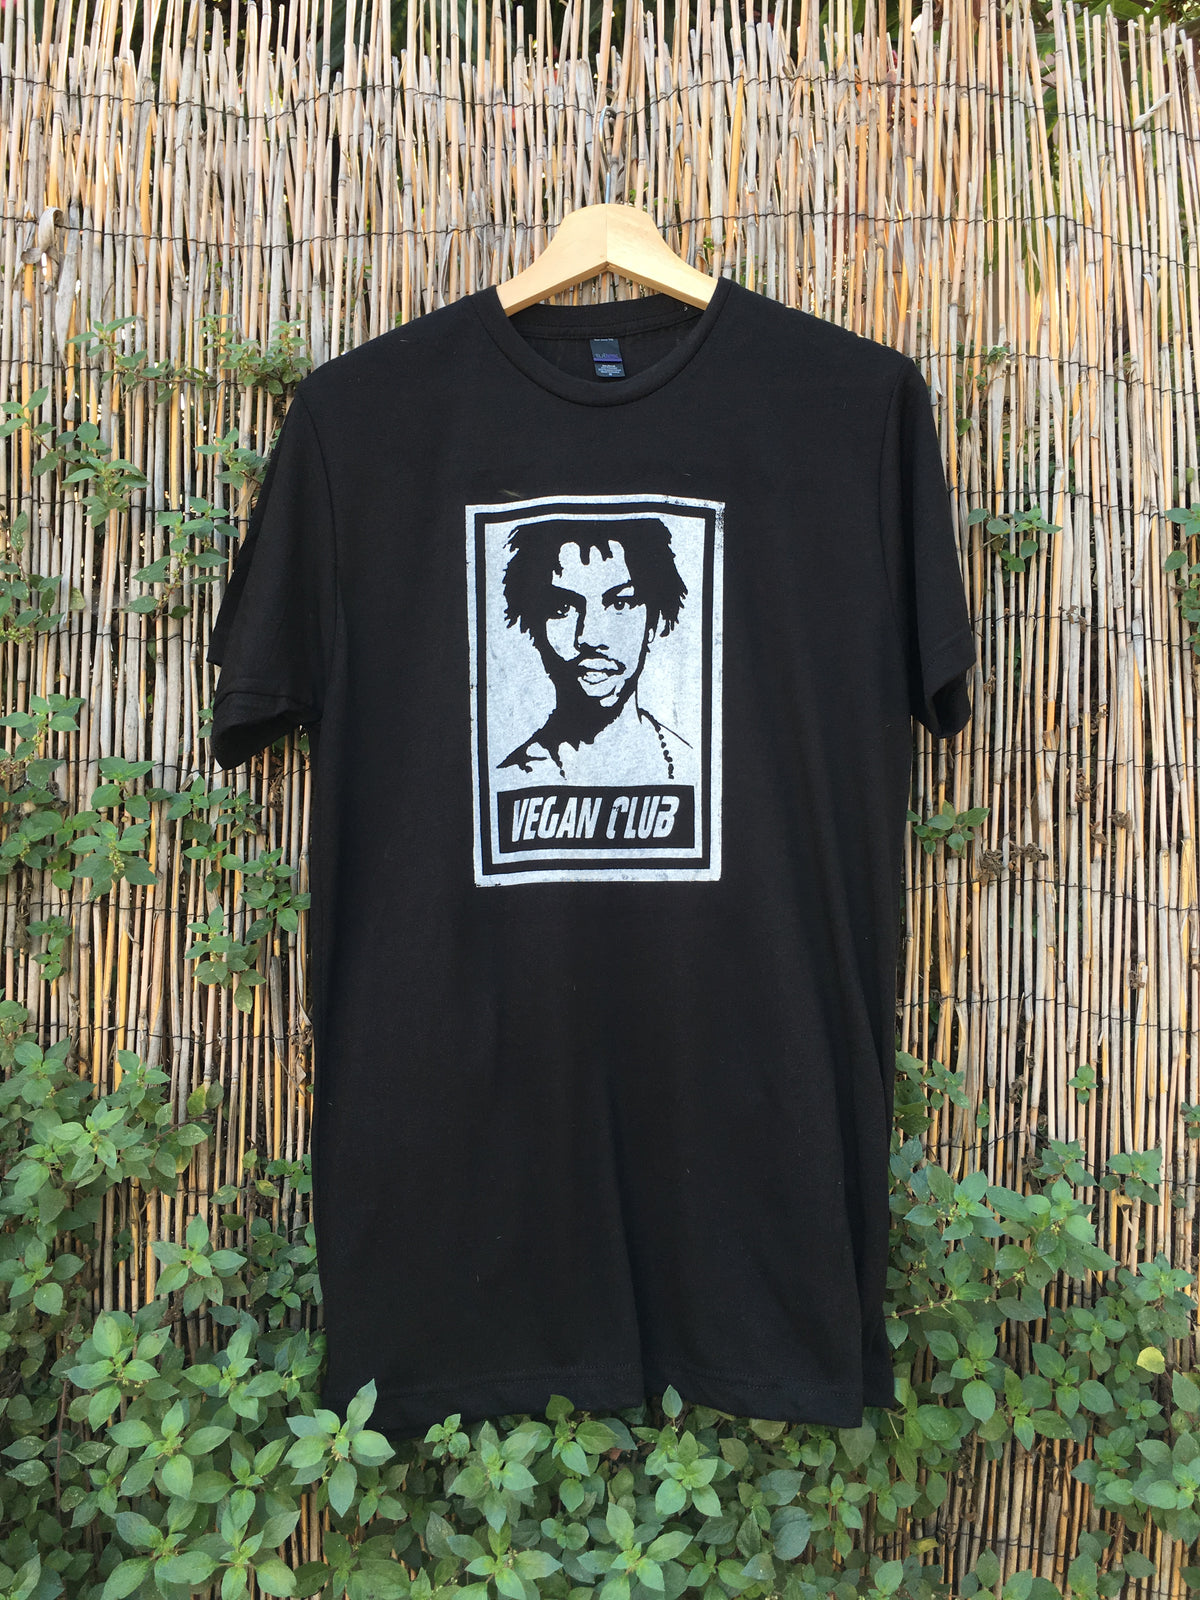 Organic Made in USA T-shirt "Vegan Club" featuring Raury